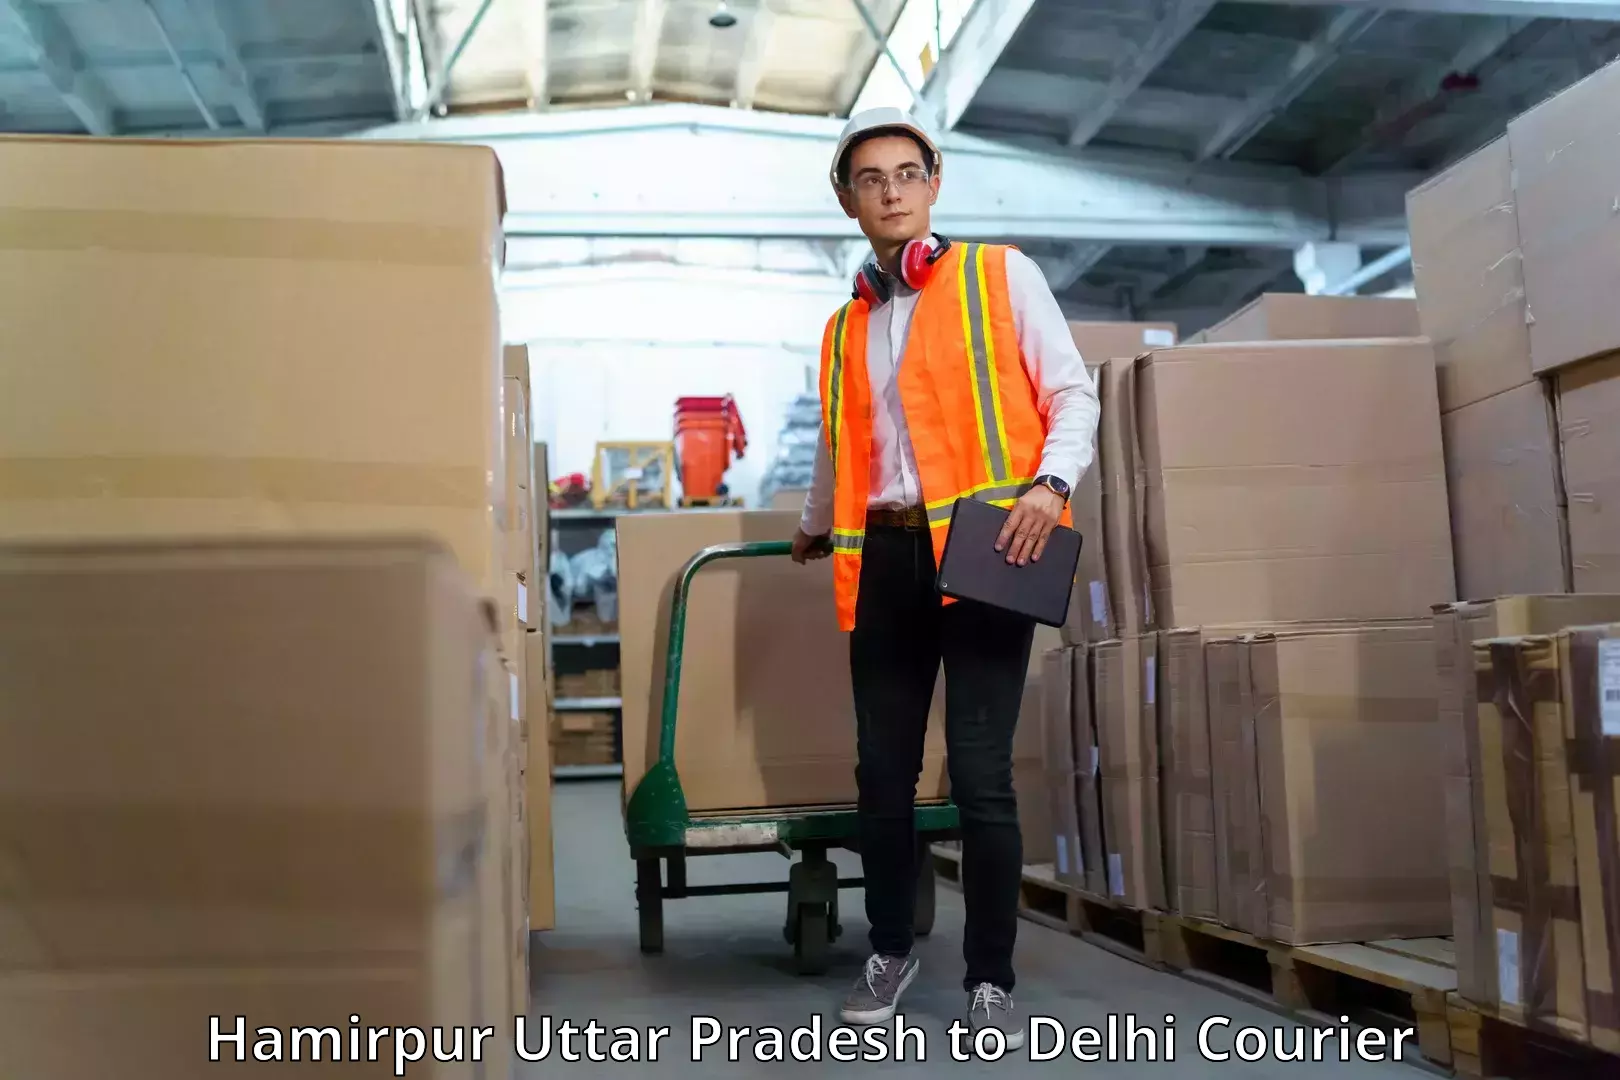 Round-the-clock parcel delivery Hamirpur Uttar Pradesh to NCR